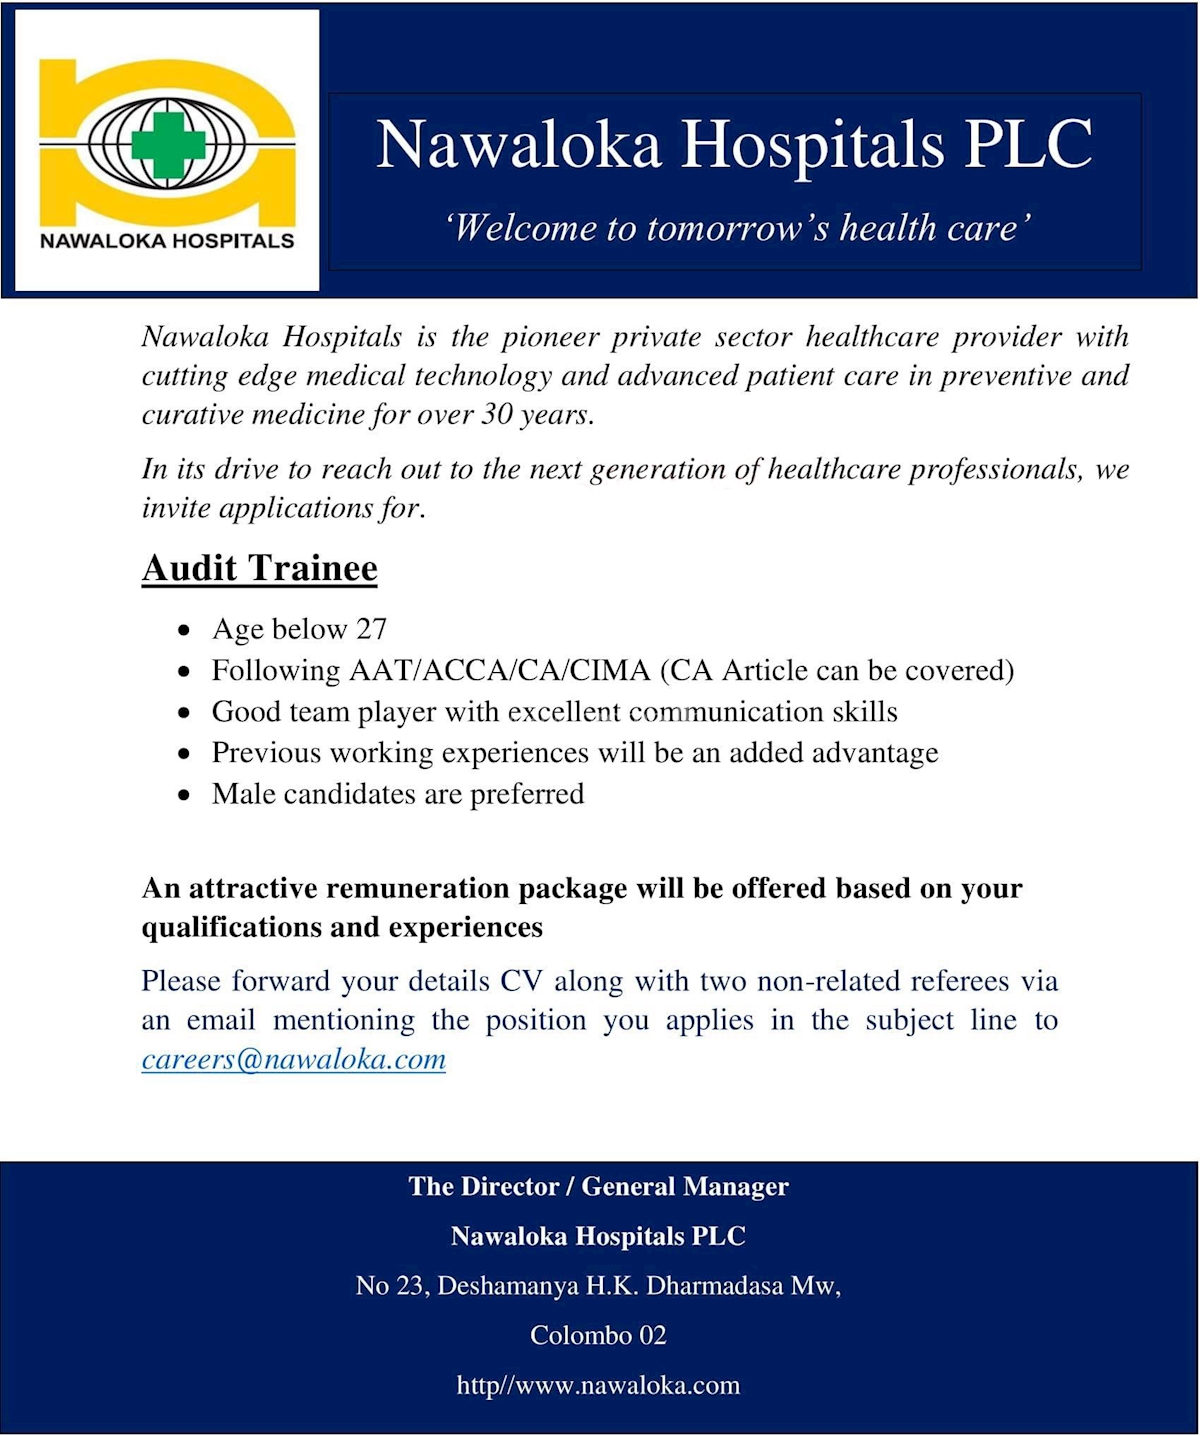 Audit Trainee Jobs Vacancies - Nawaloka Hospitals PLC Job Vacancy Details